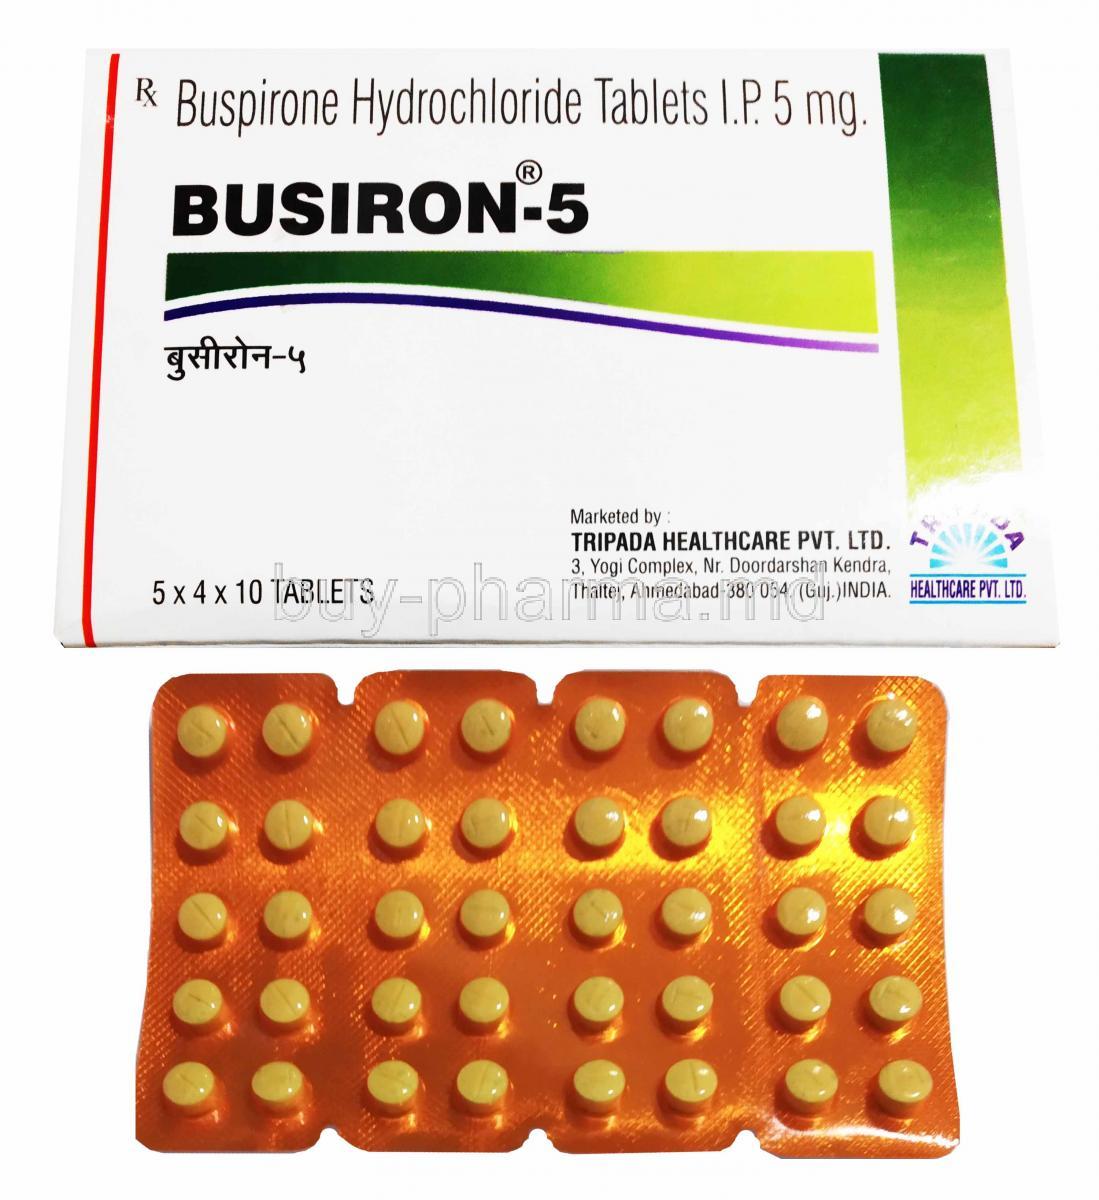 Busiron, Buspirone 5mg box and tablets